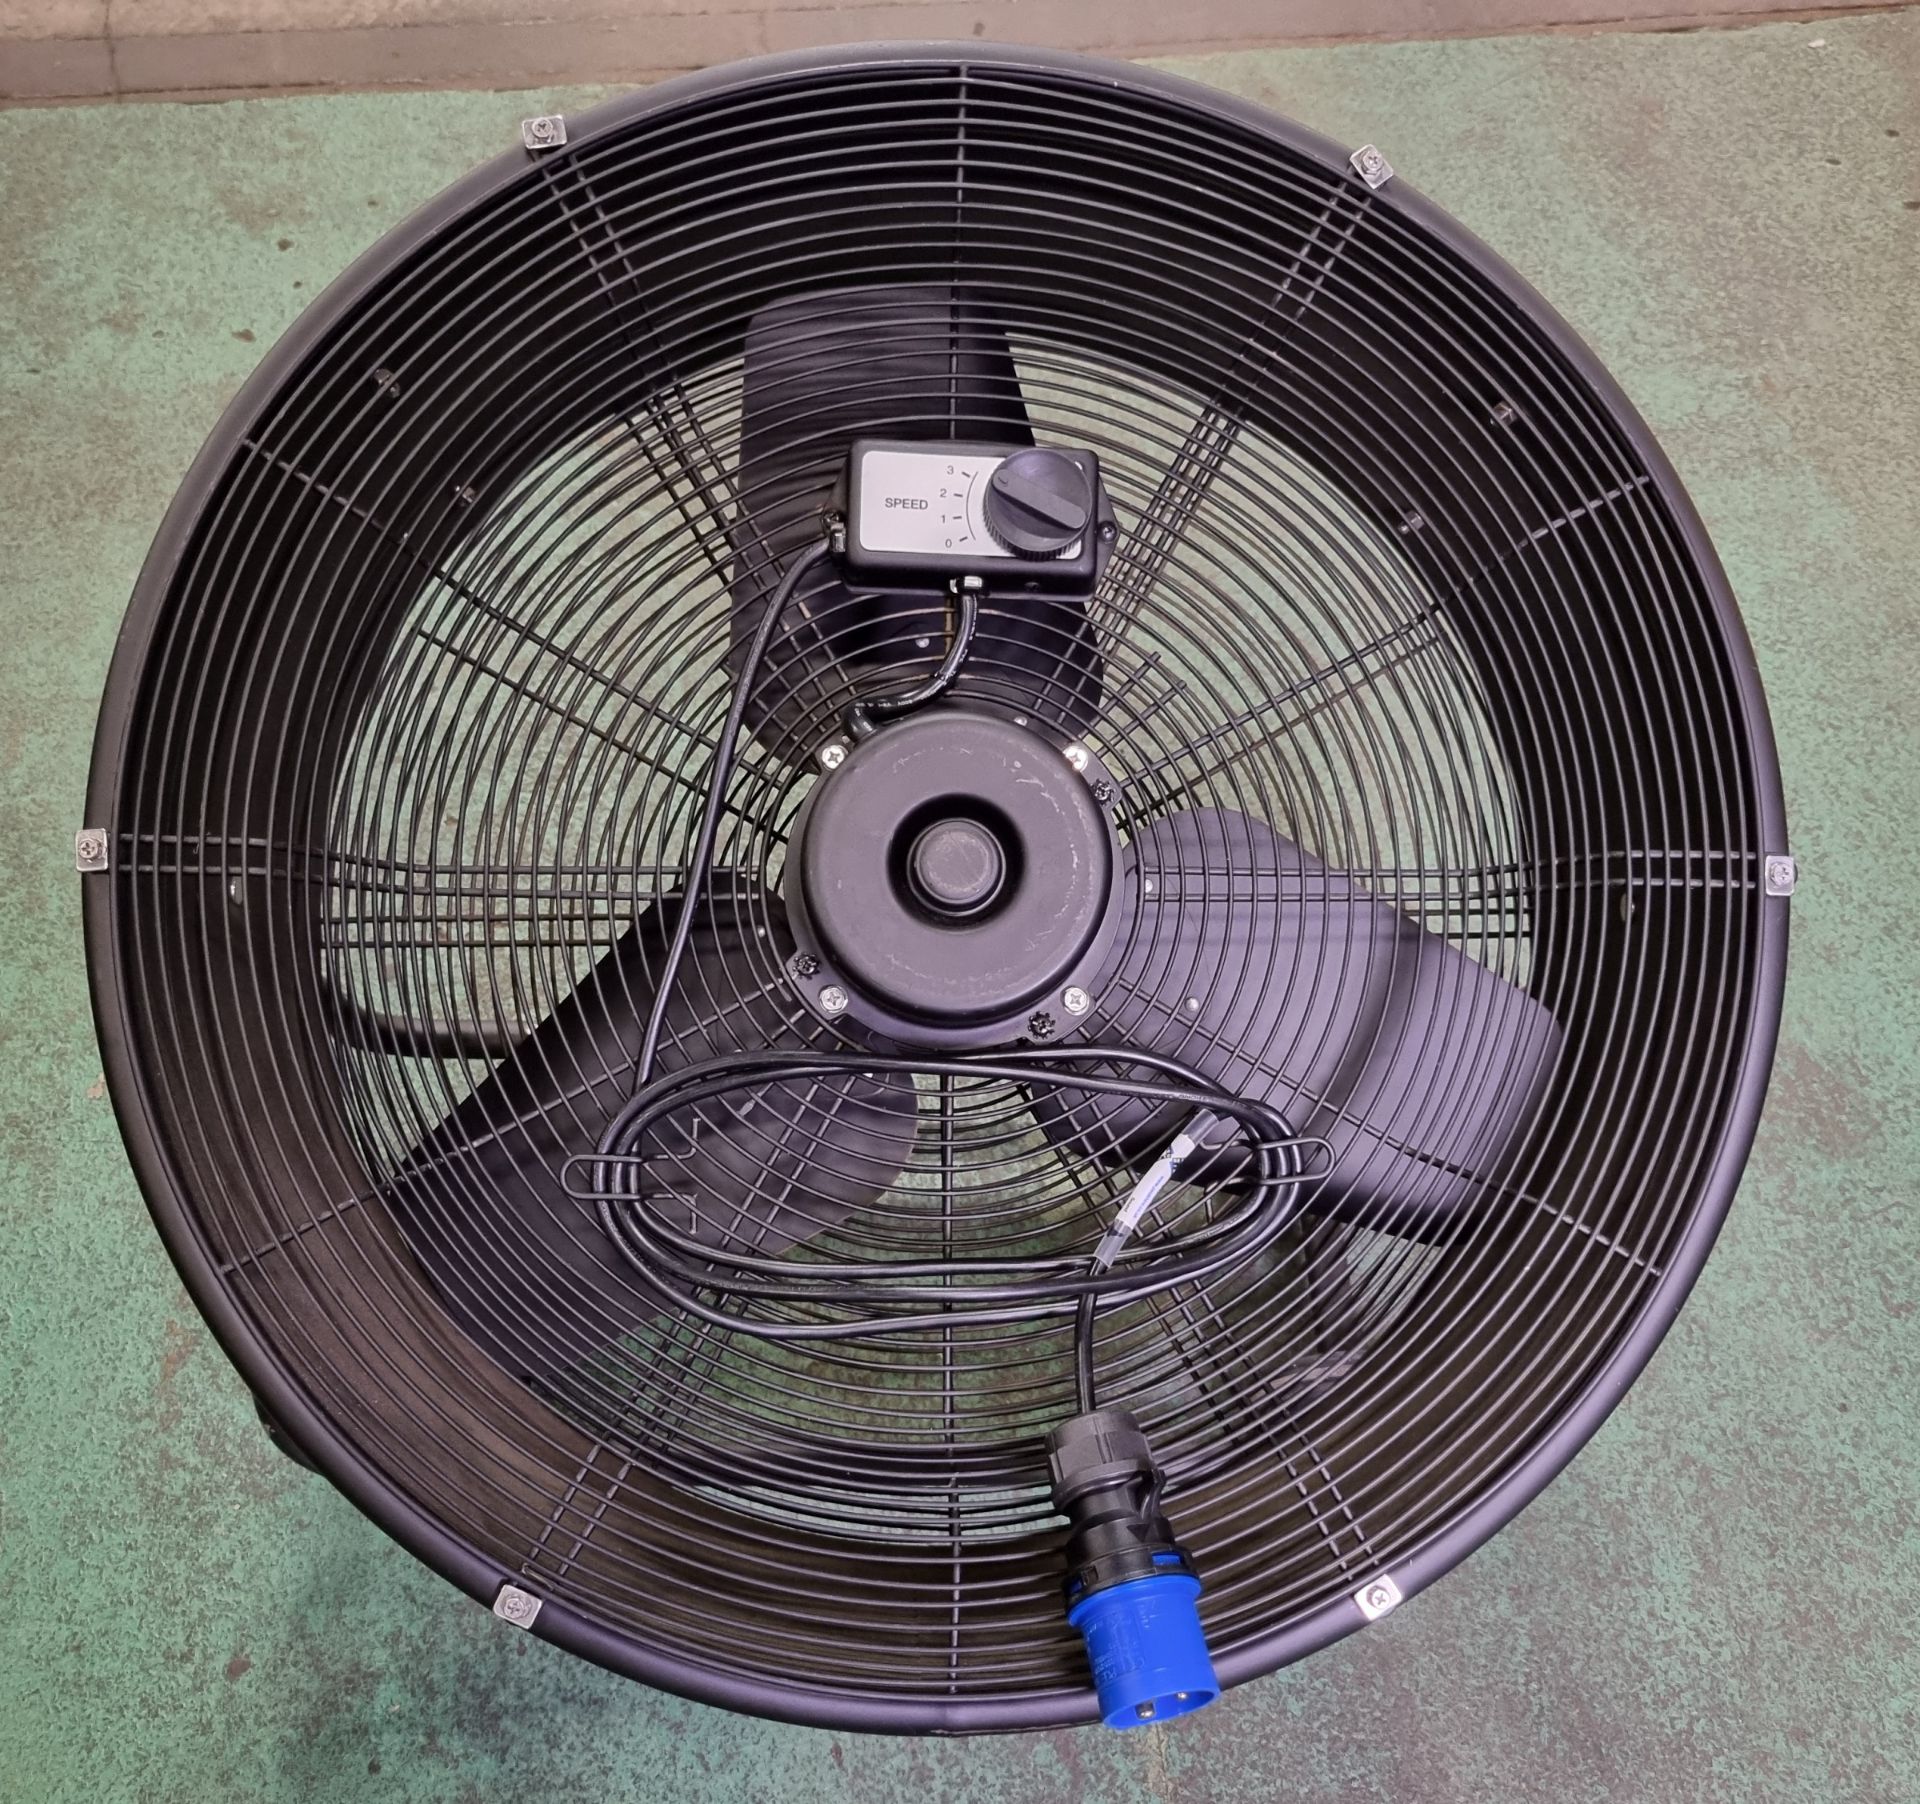 Sealey HVD24 3 speed big fan - diameter: 24 inch - 900-1100 RPM - Image 2 of 5